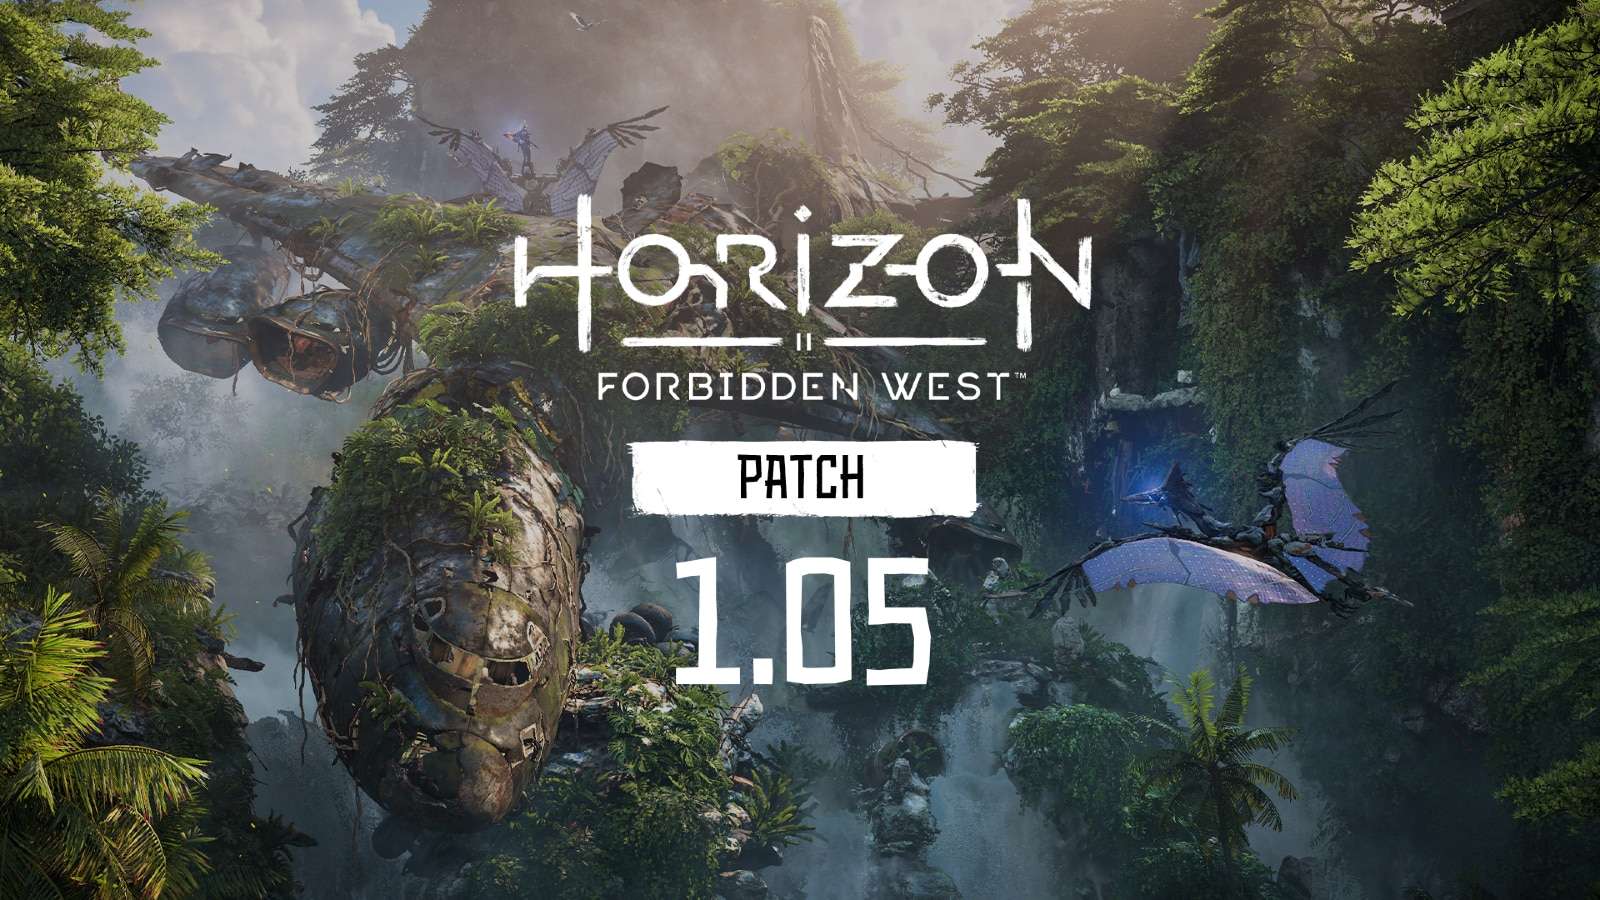 horizon forbidden west patch 1.05 feature image